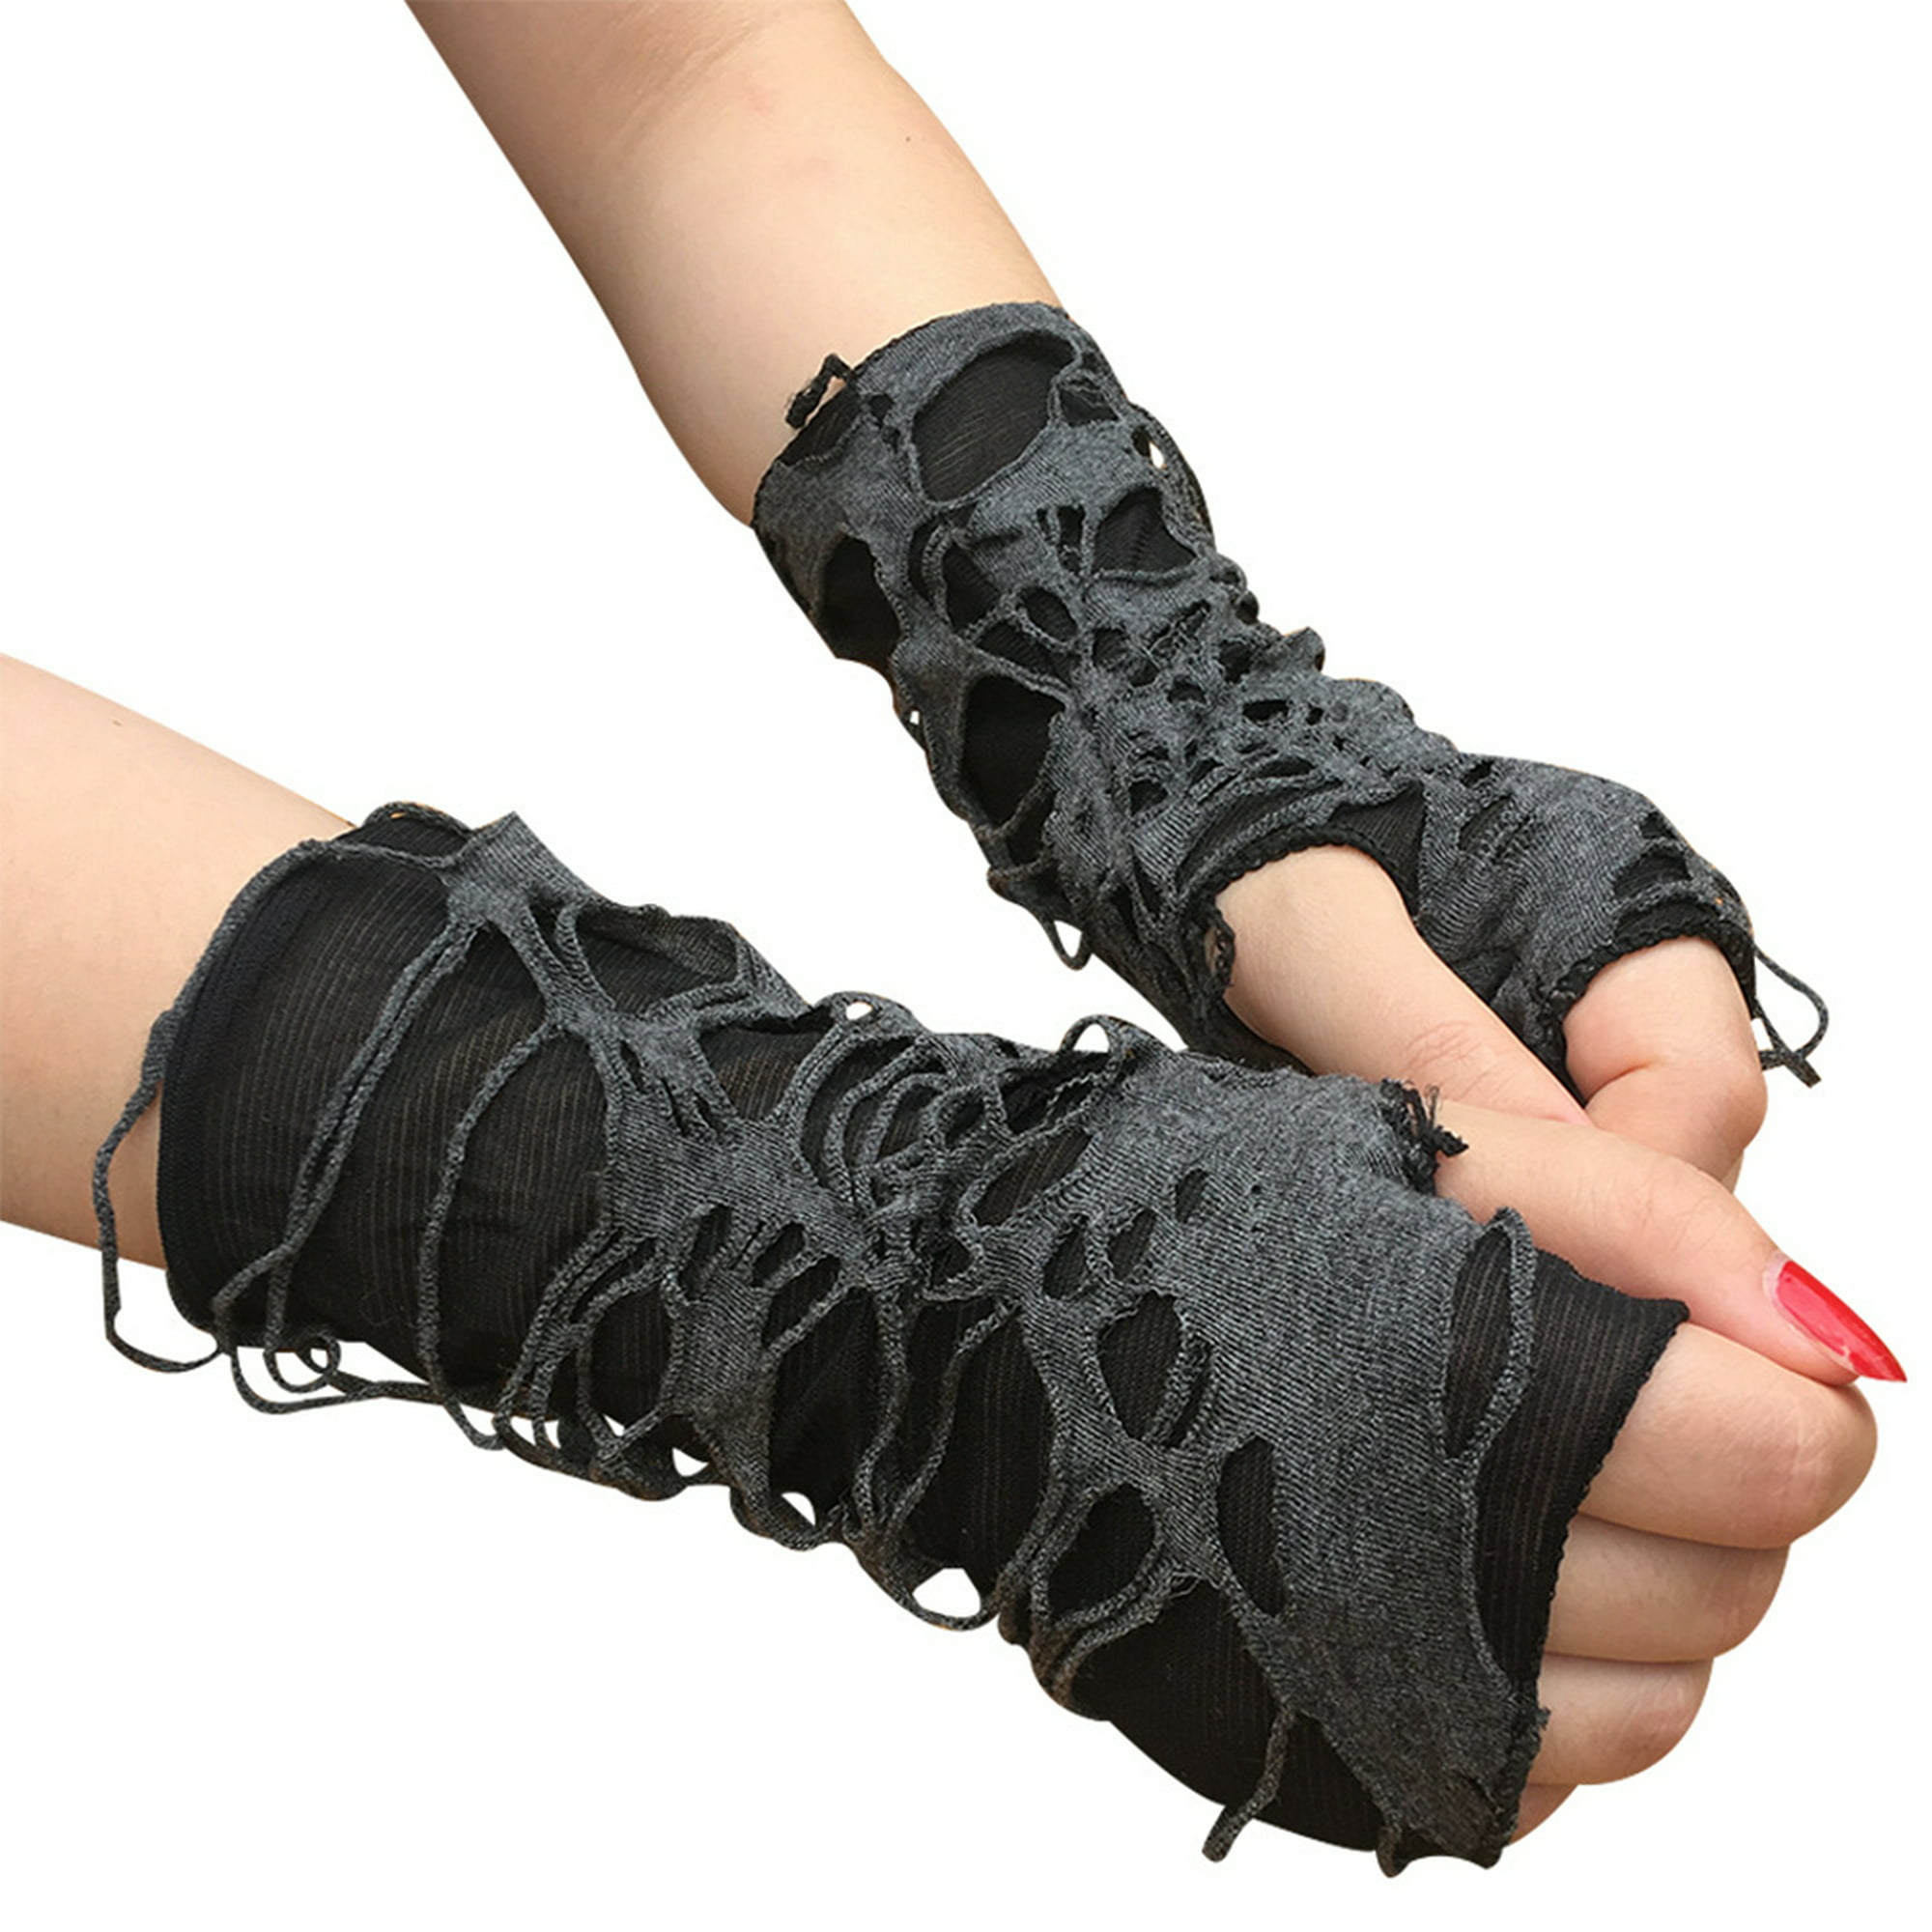 Guantes sin punk para mujer, guantes rasgados para cosplay para de  disfraces de Halloween, 1 par, color negro Colcomx guantes negros sin dedos